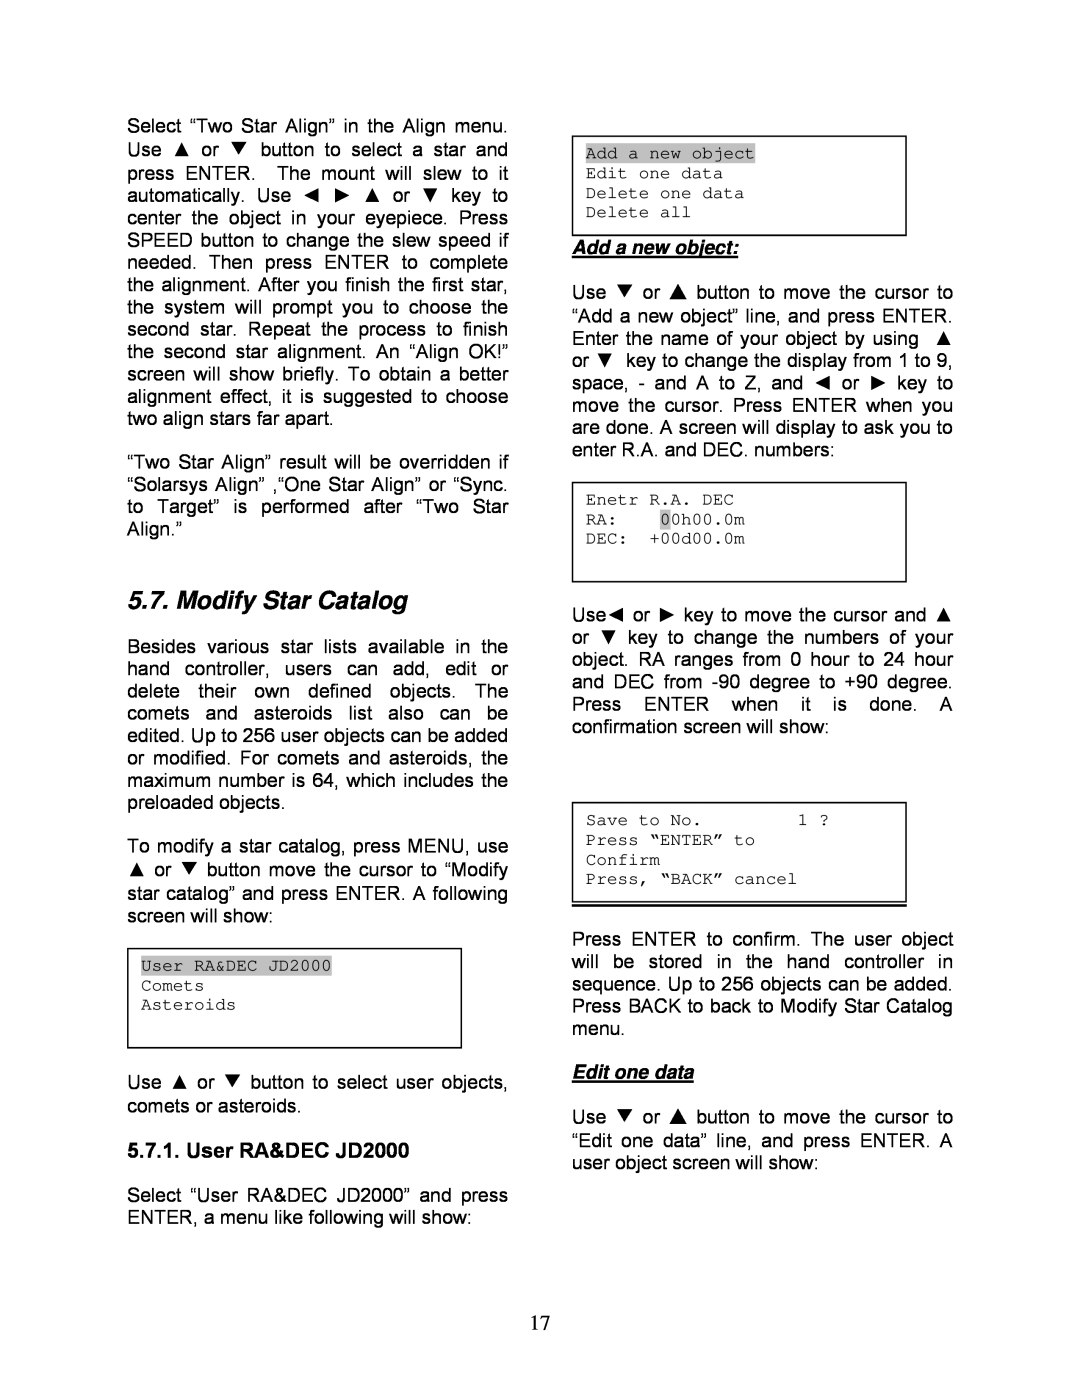 iOptron N114 instruction manual Modify Star Catalog, User RA&DEC JD2000 